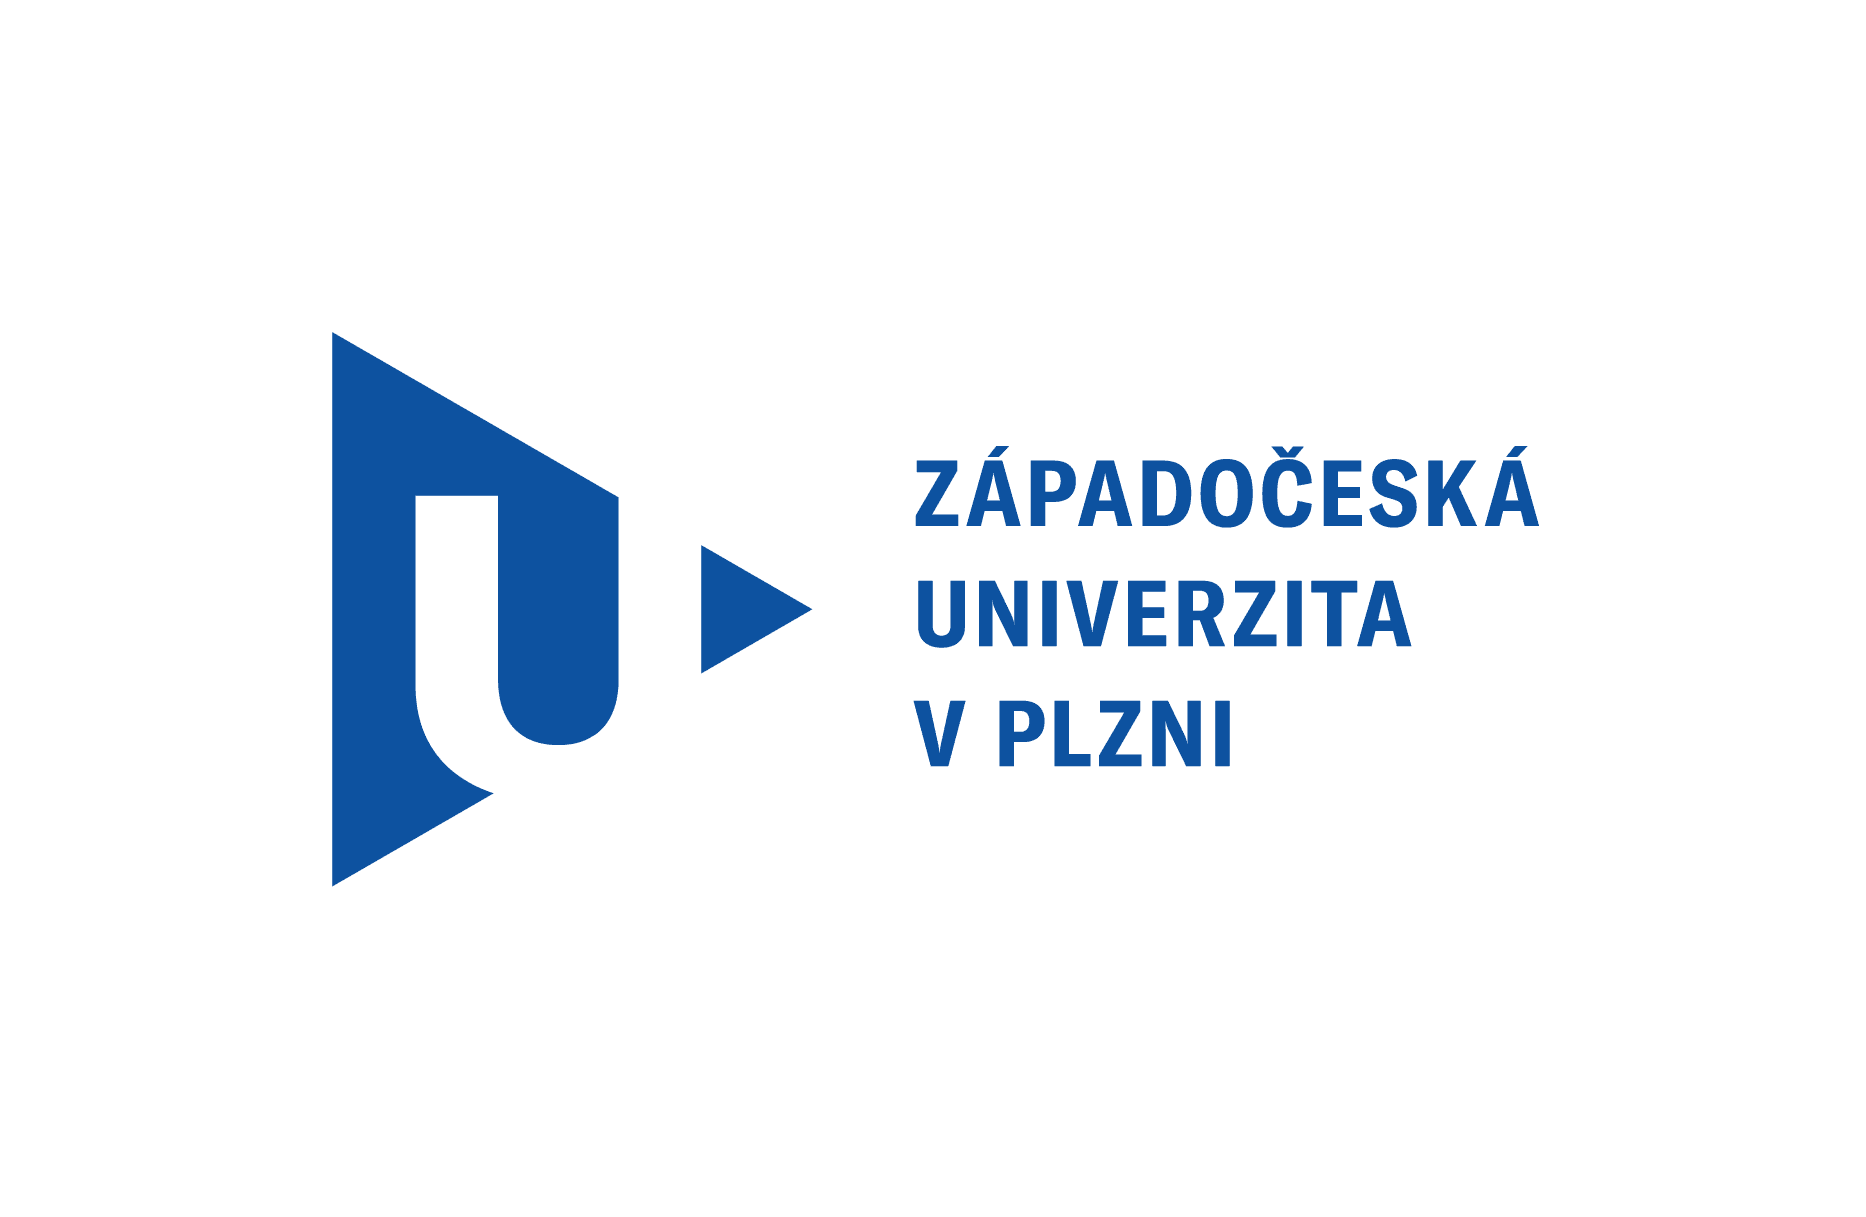 ZCU logo